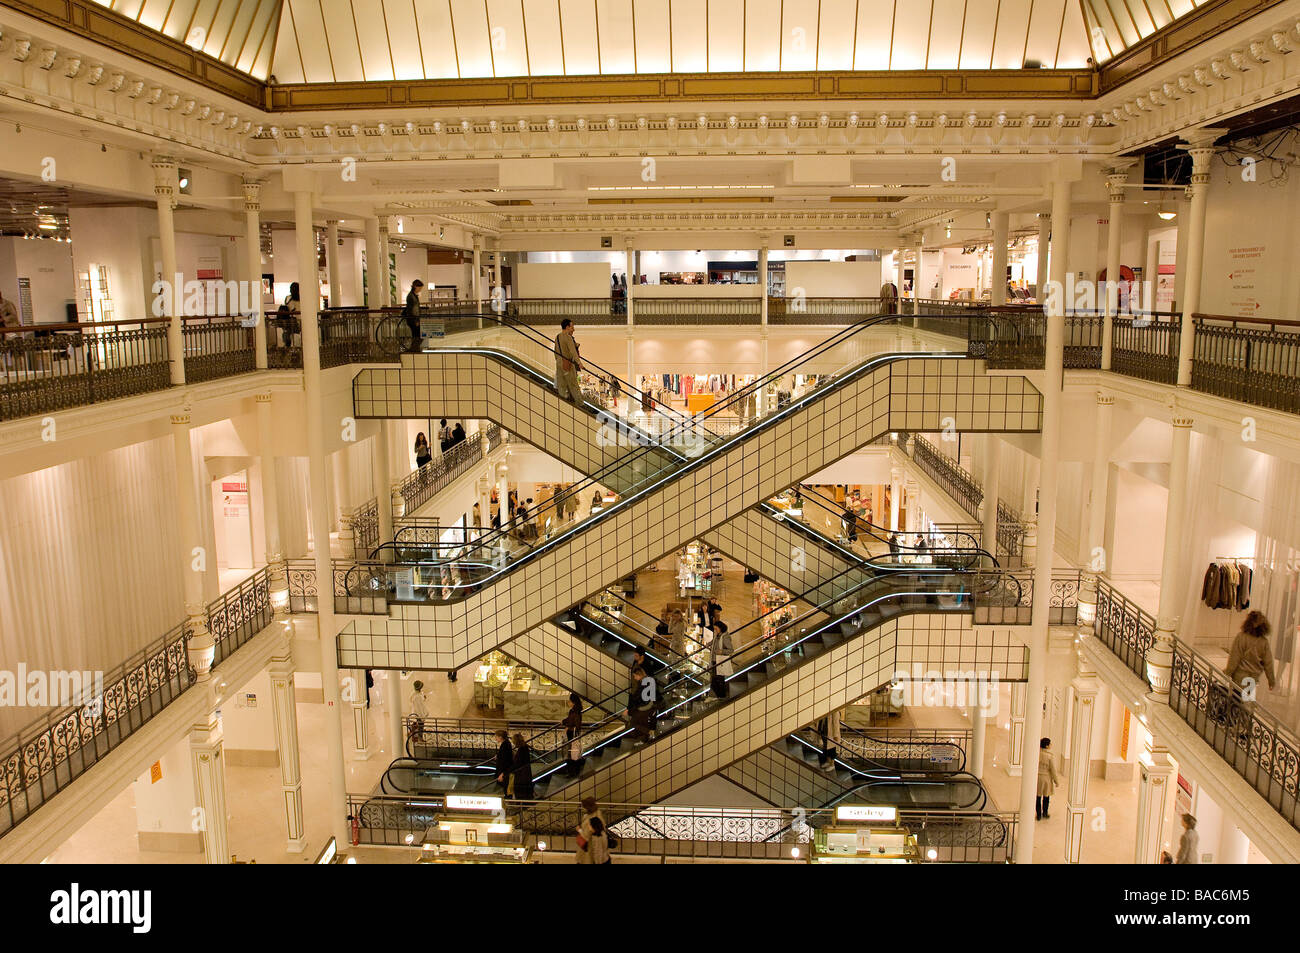 France, Paris, interior of the big store Le Bon Marche Stock Photo